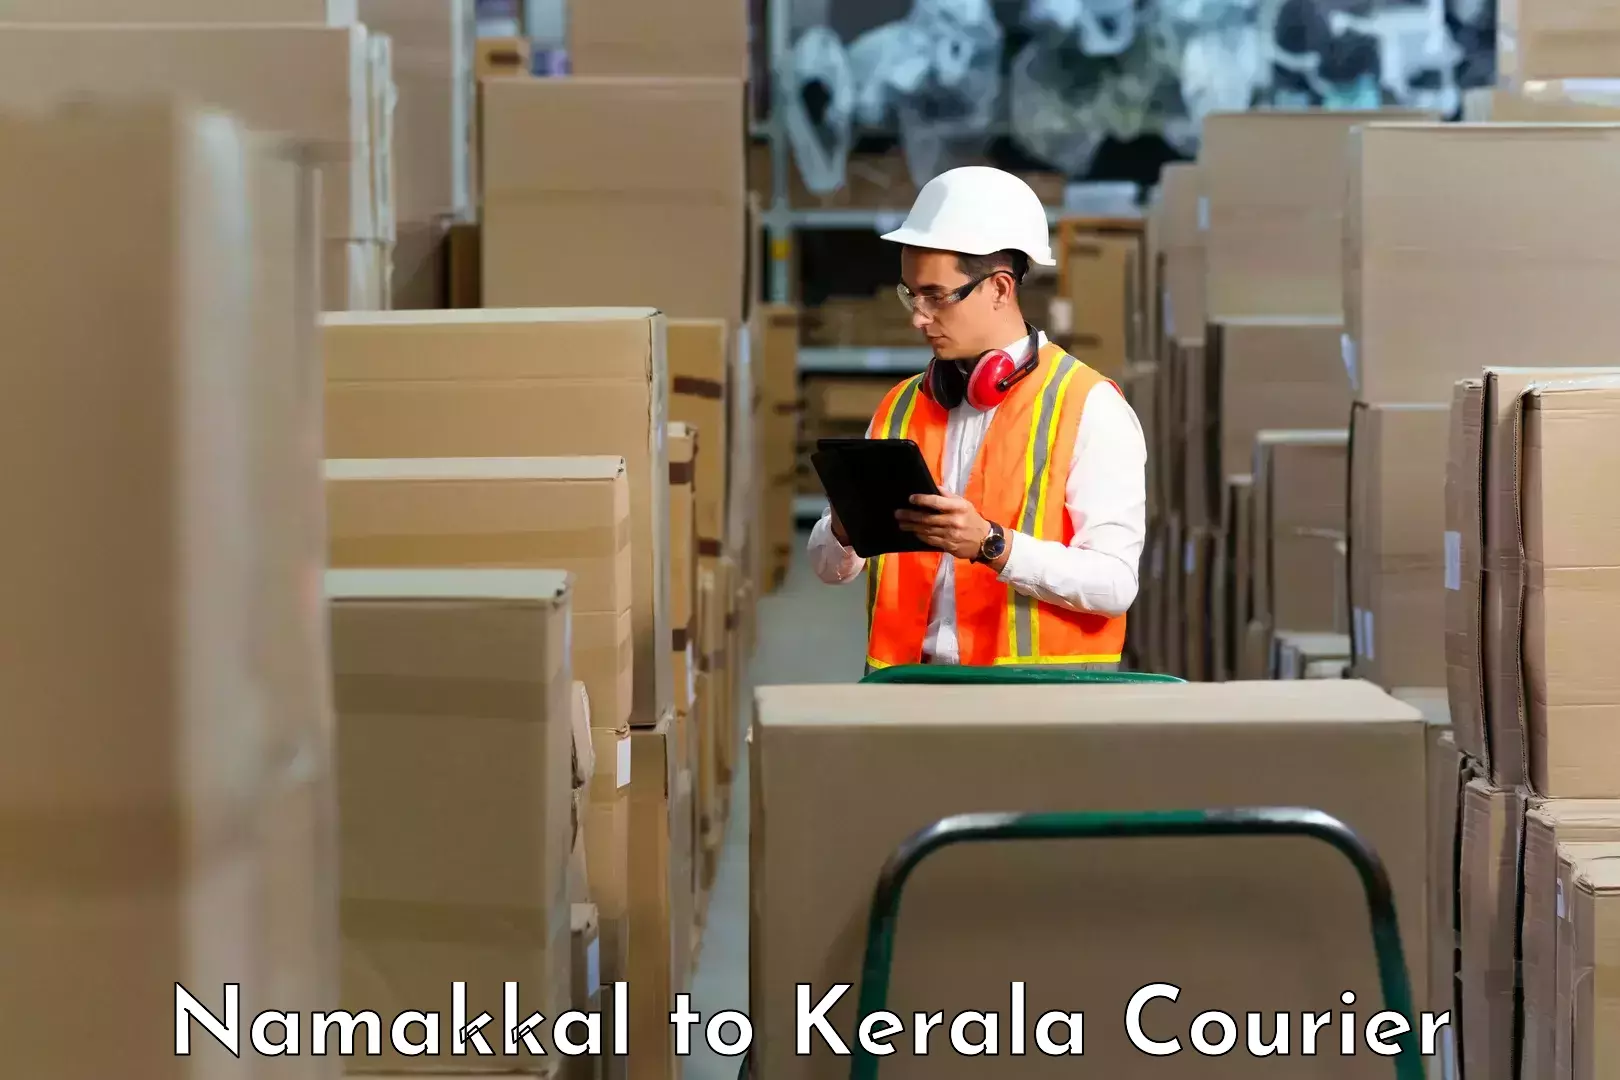 Parcel handling and care Namakkal to Ernakulam